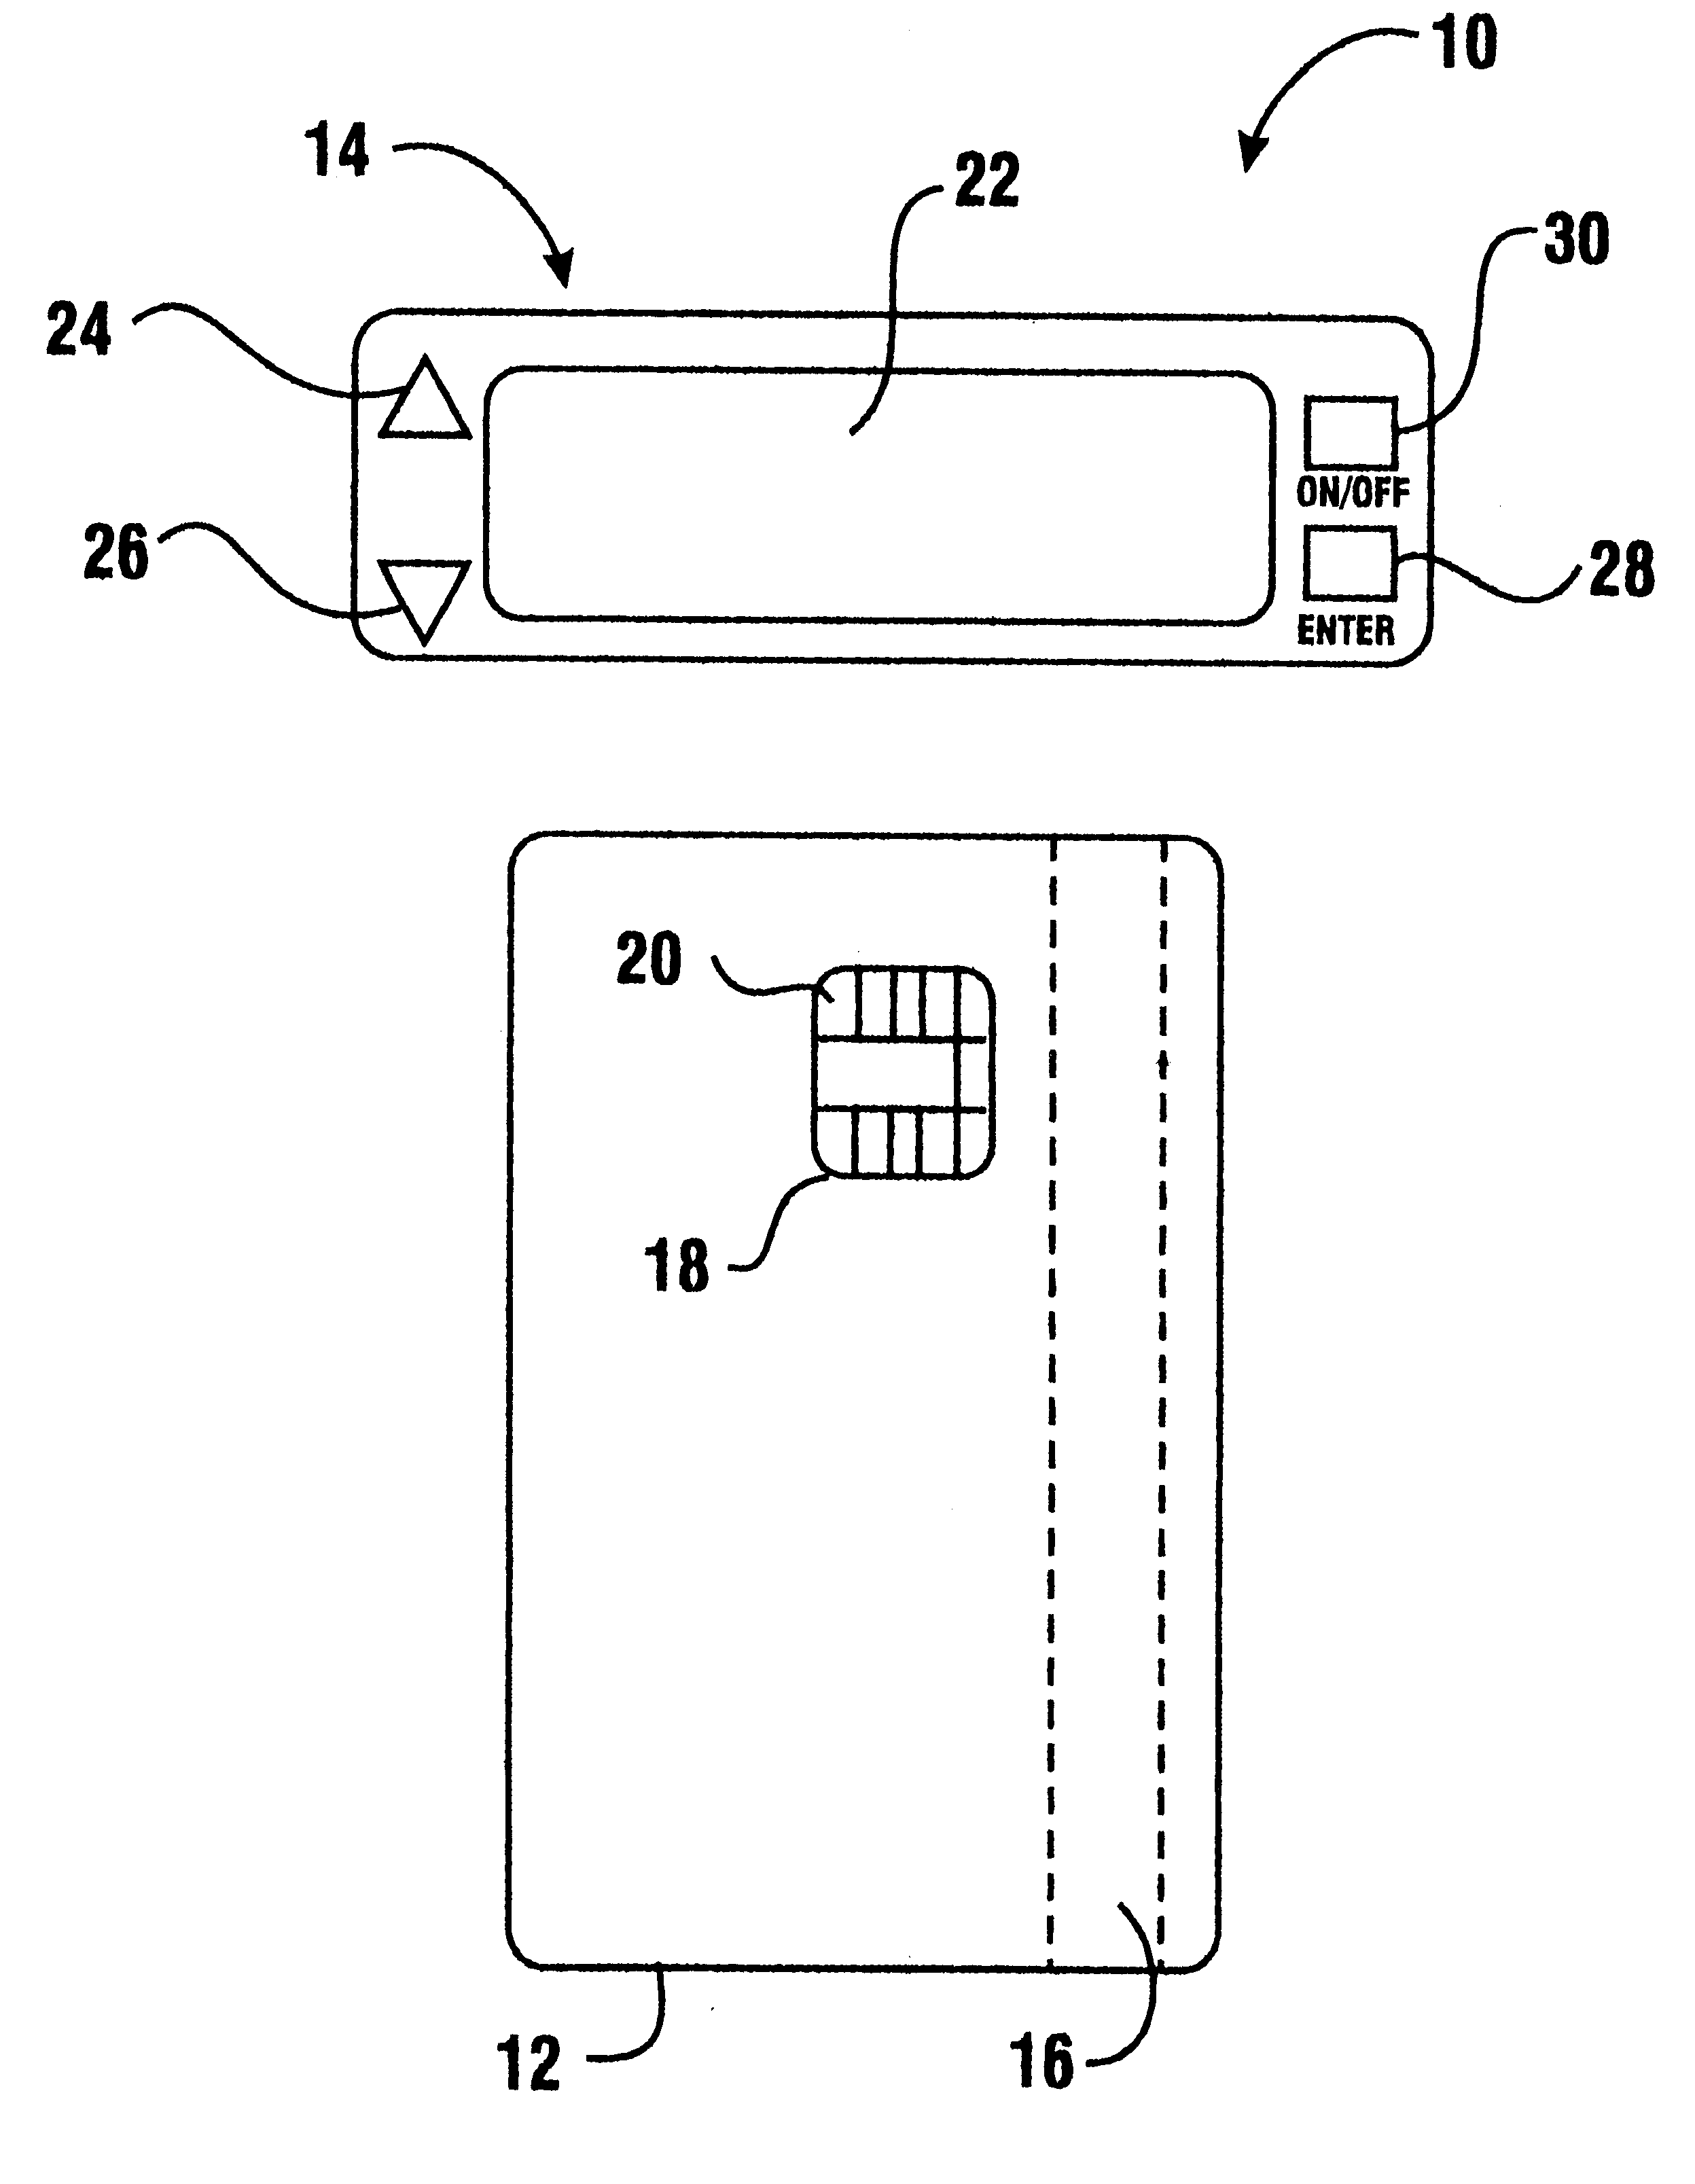 Transaction apparatus and method